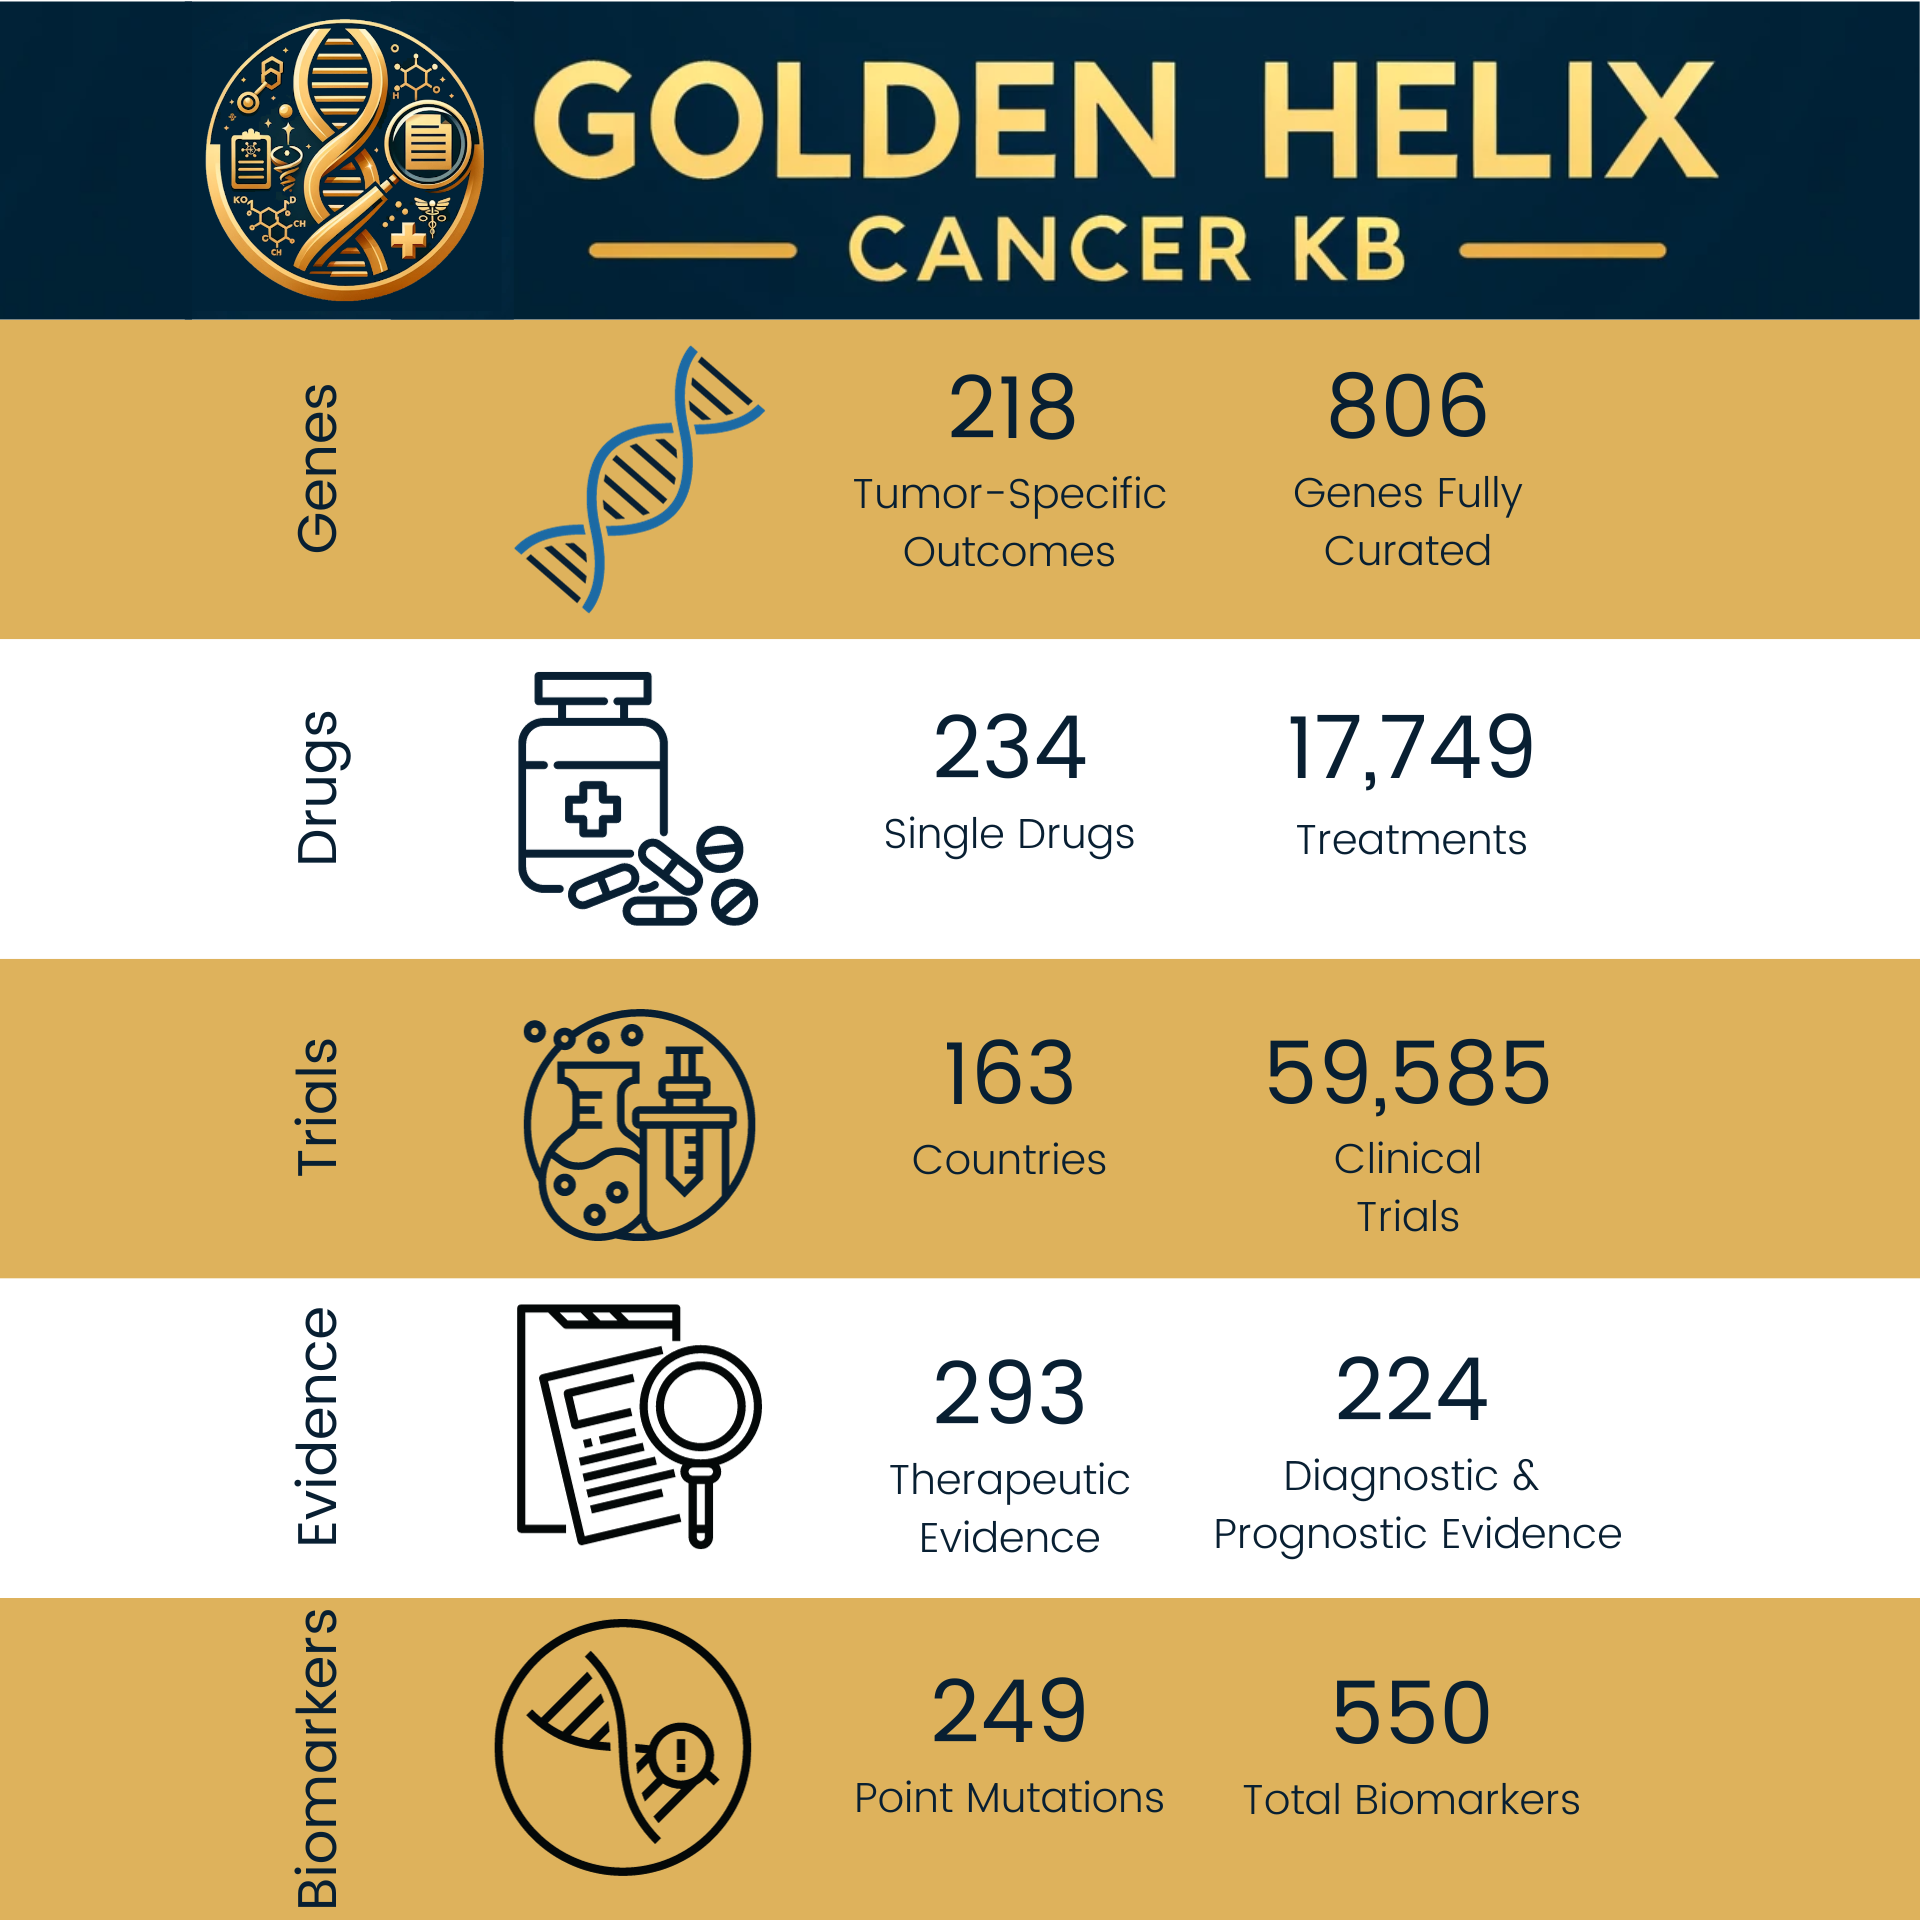 Golden Helix CancerKB Statistics